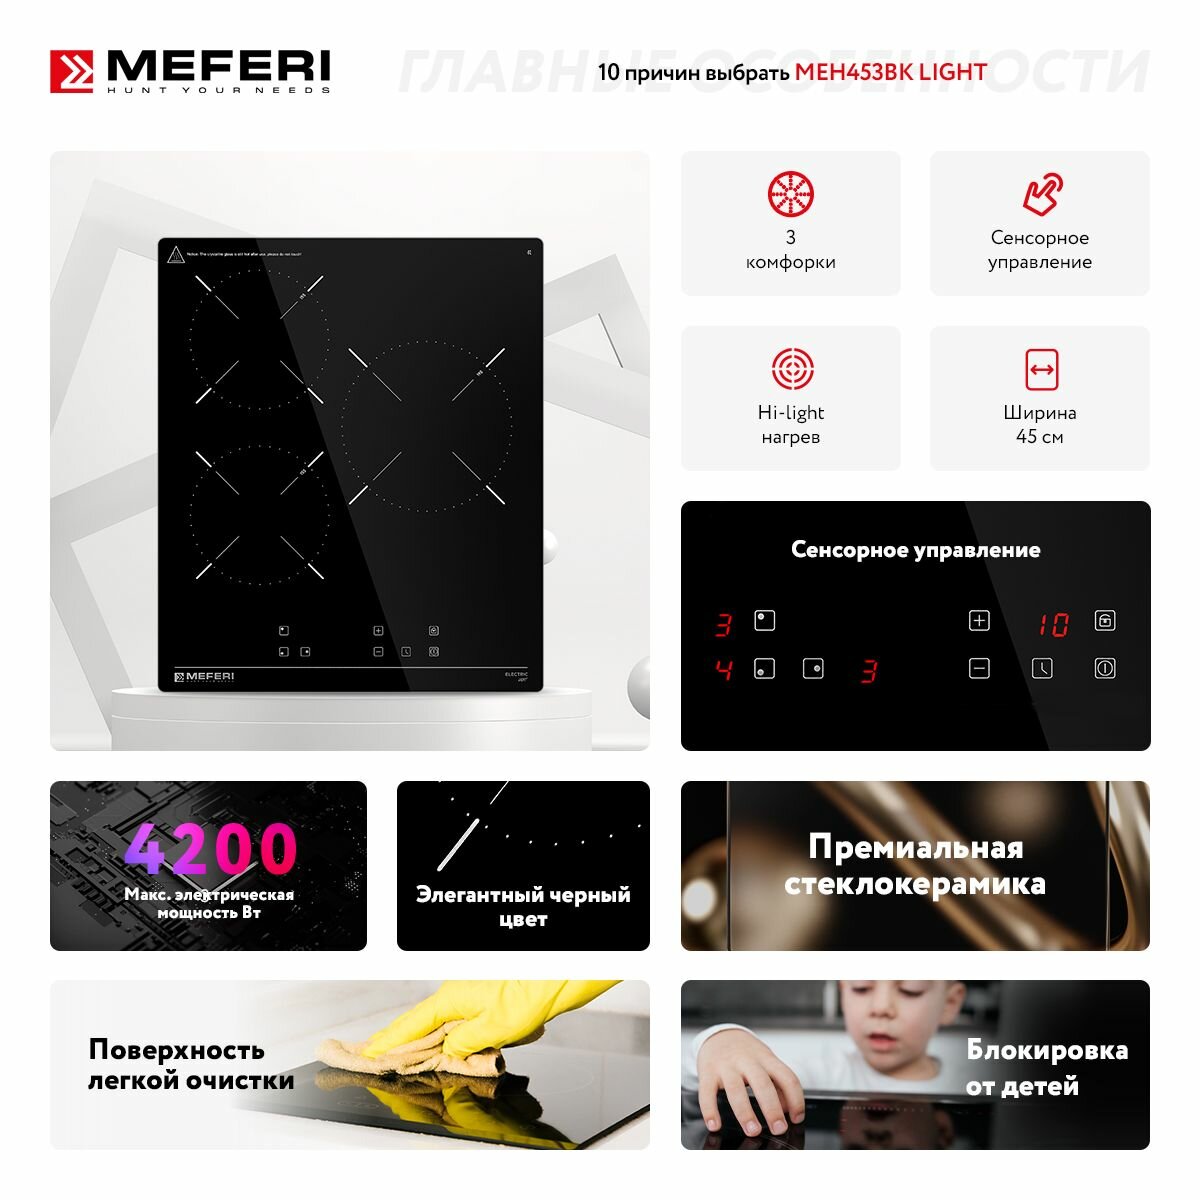 Meferi MEH453BK Light